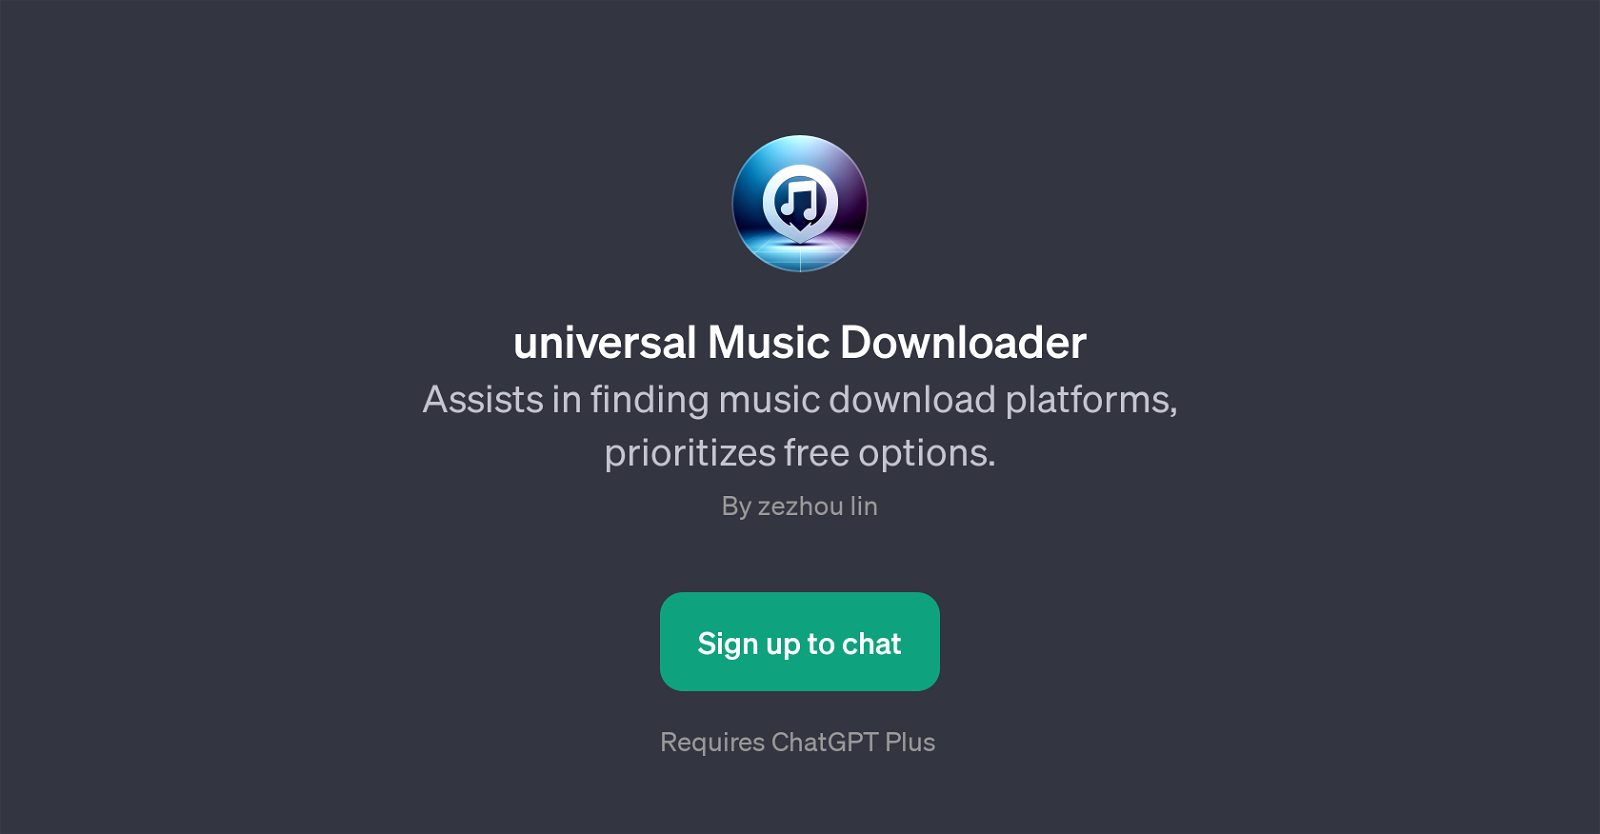 Universal Music Downloader website